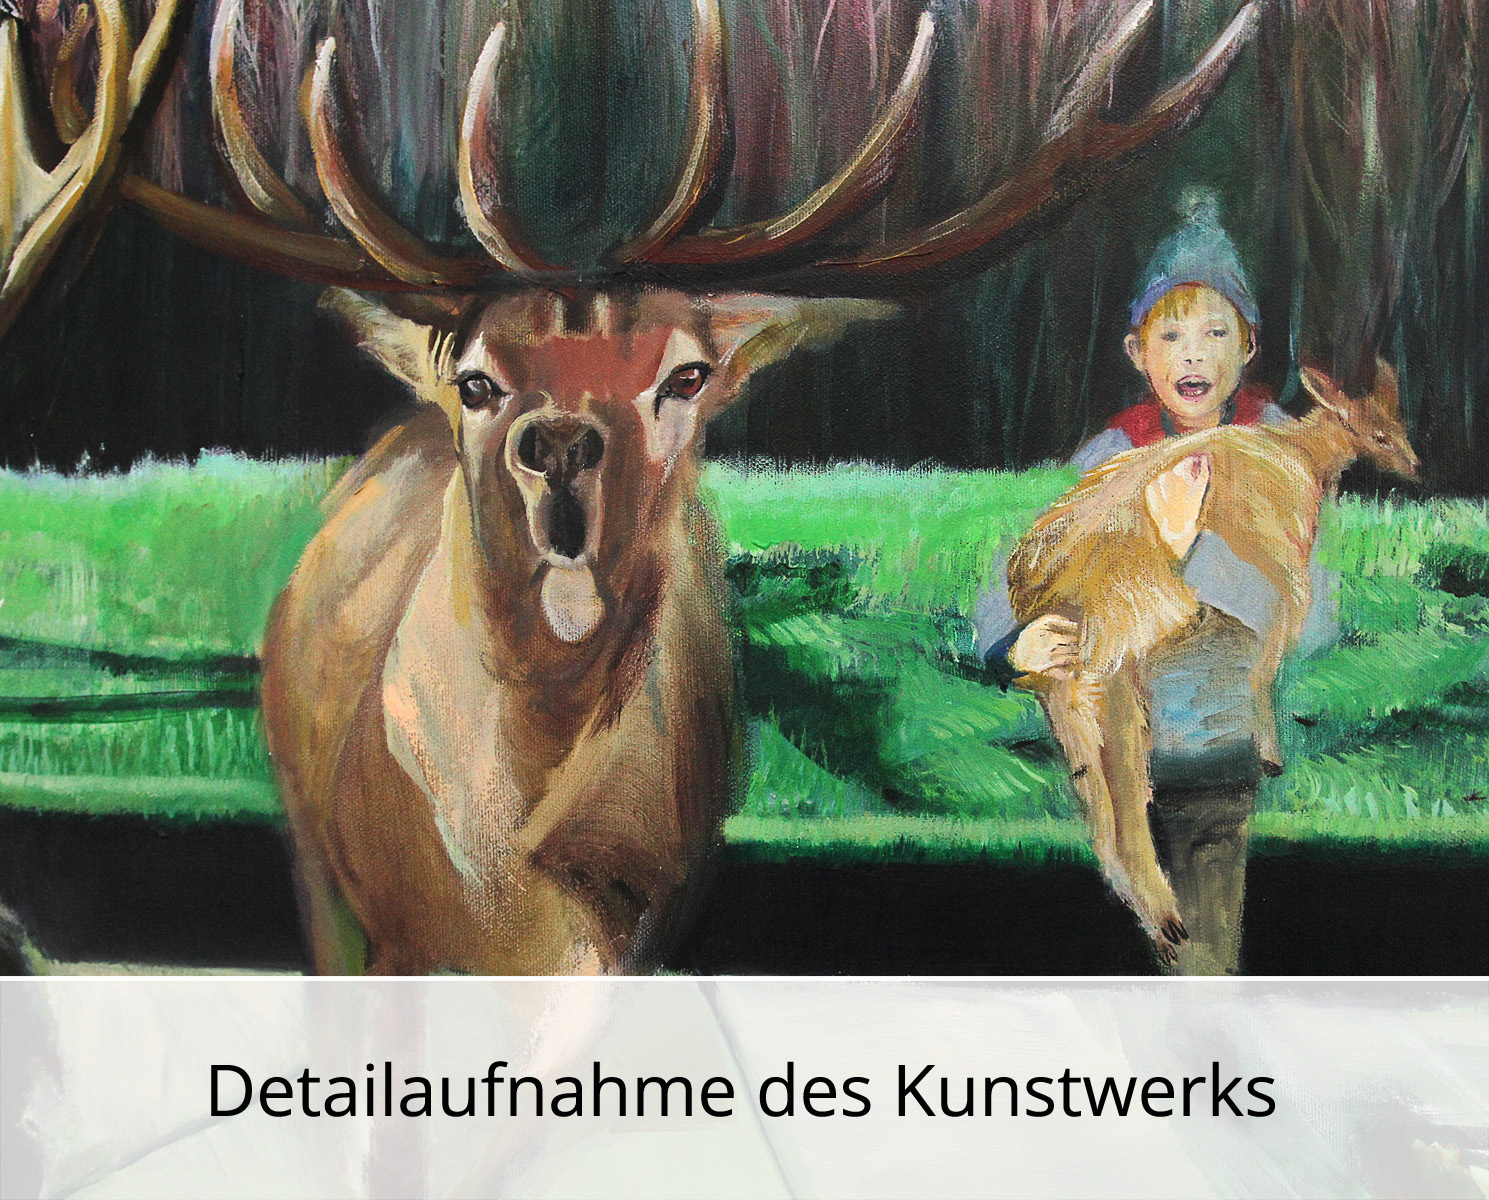 D. Block: "Der Junge aus dem Wald", Original/Unikat, expressive Ölmalerei